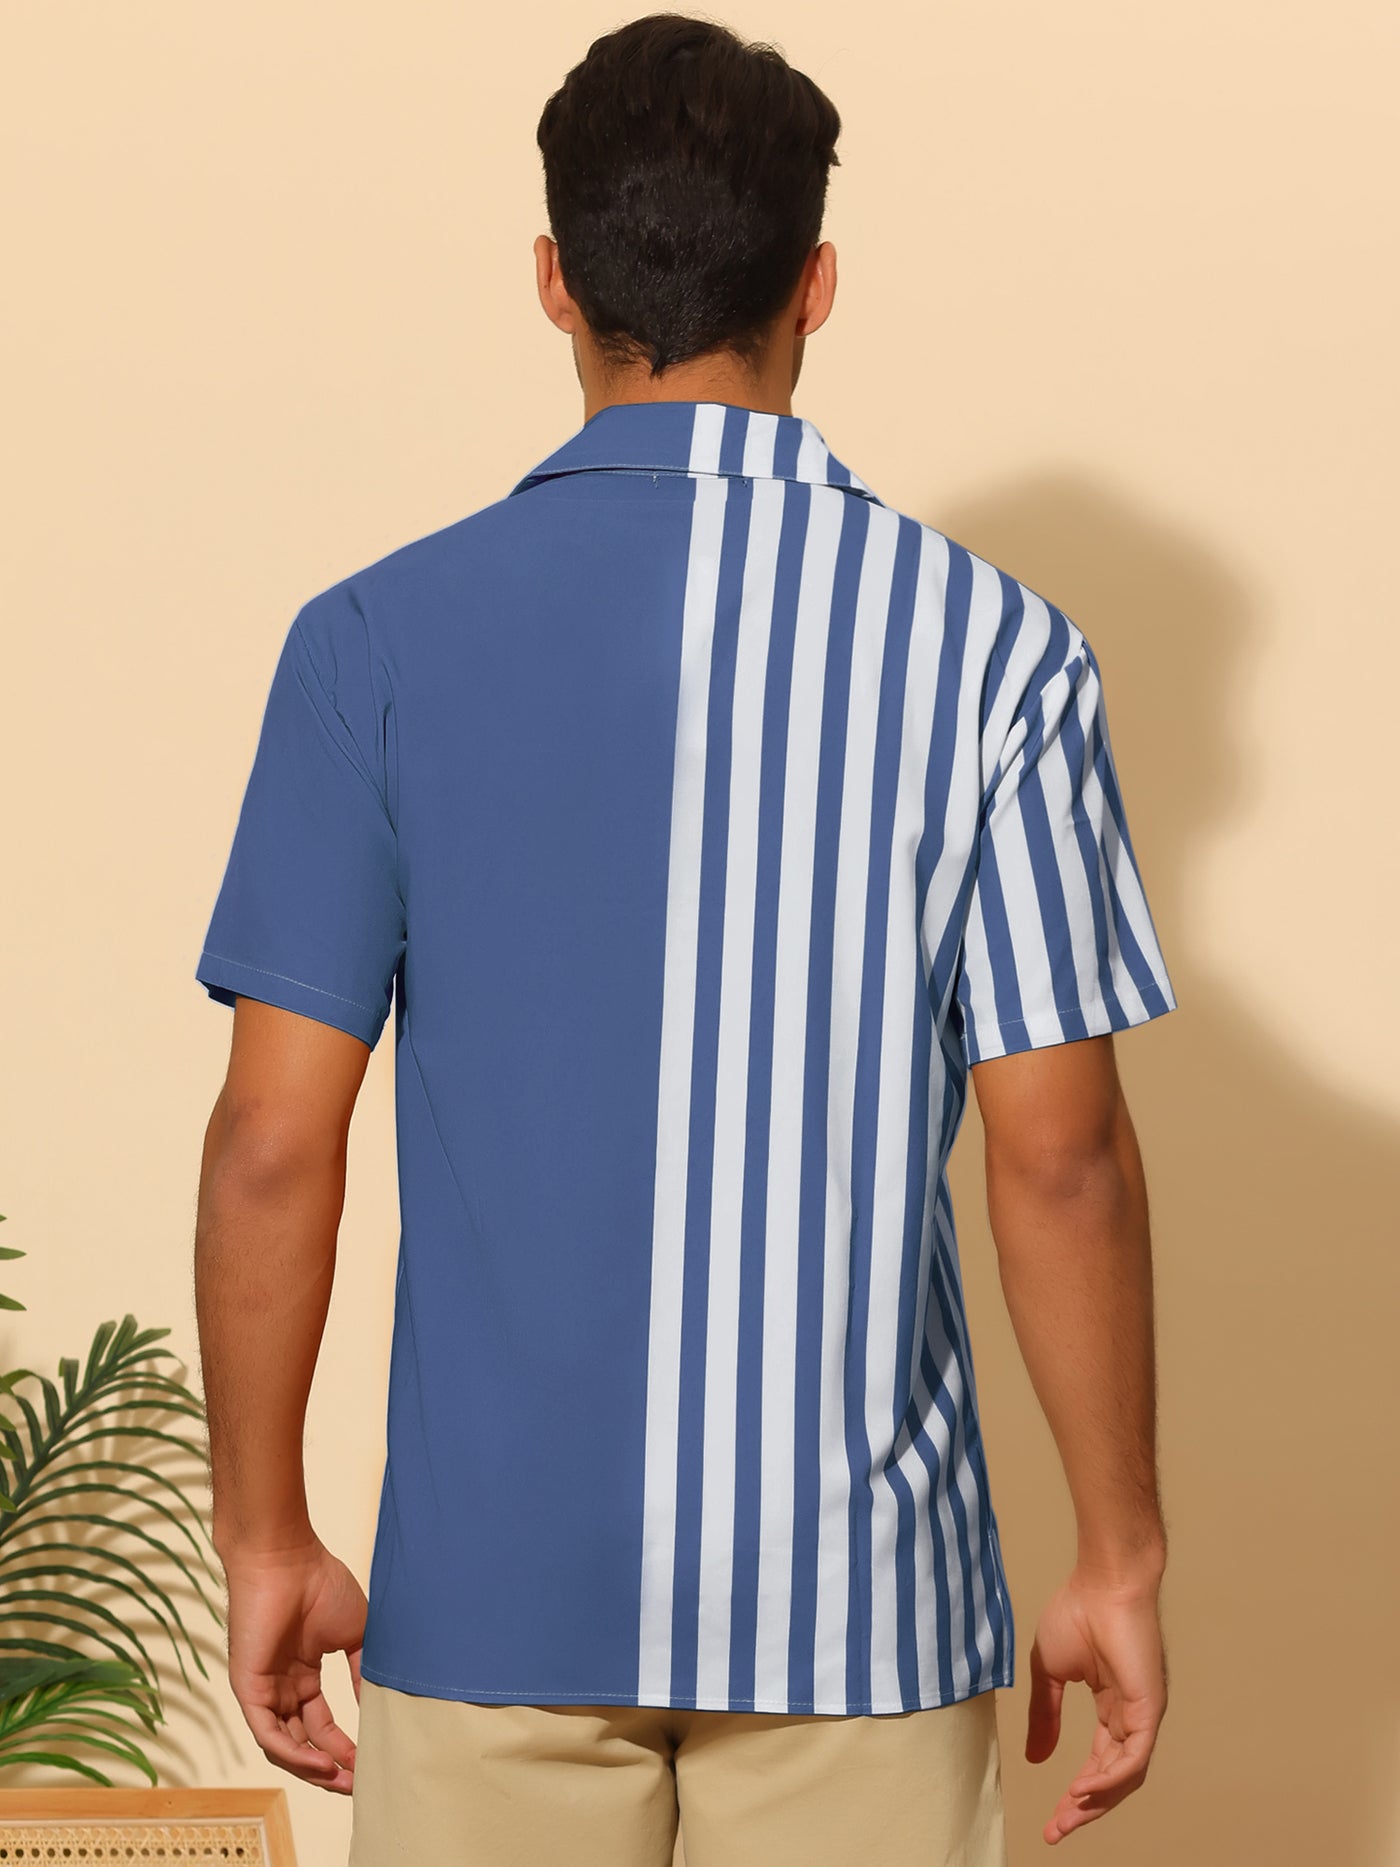 Bublédon Striped Patchwork Shirts for Men's Short Sleeved Color Block Summer Beach Shirt